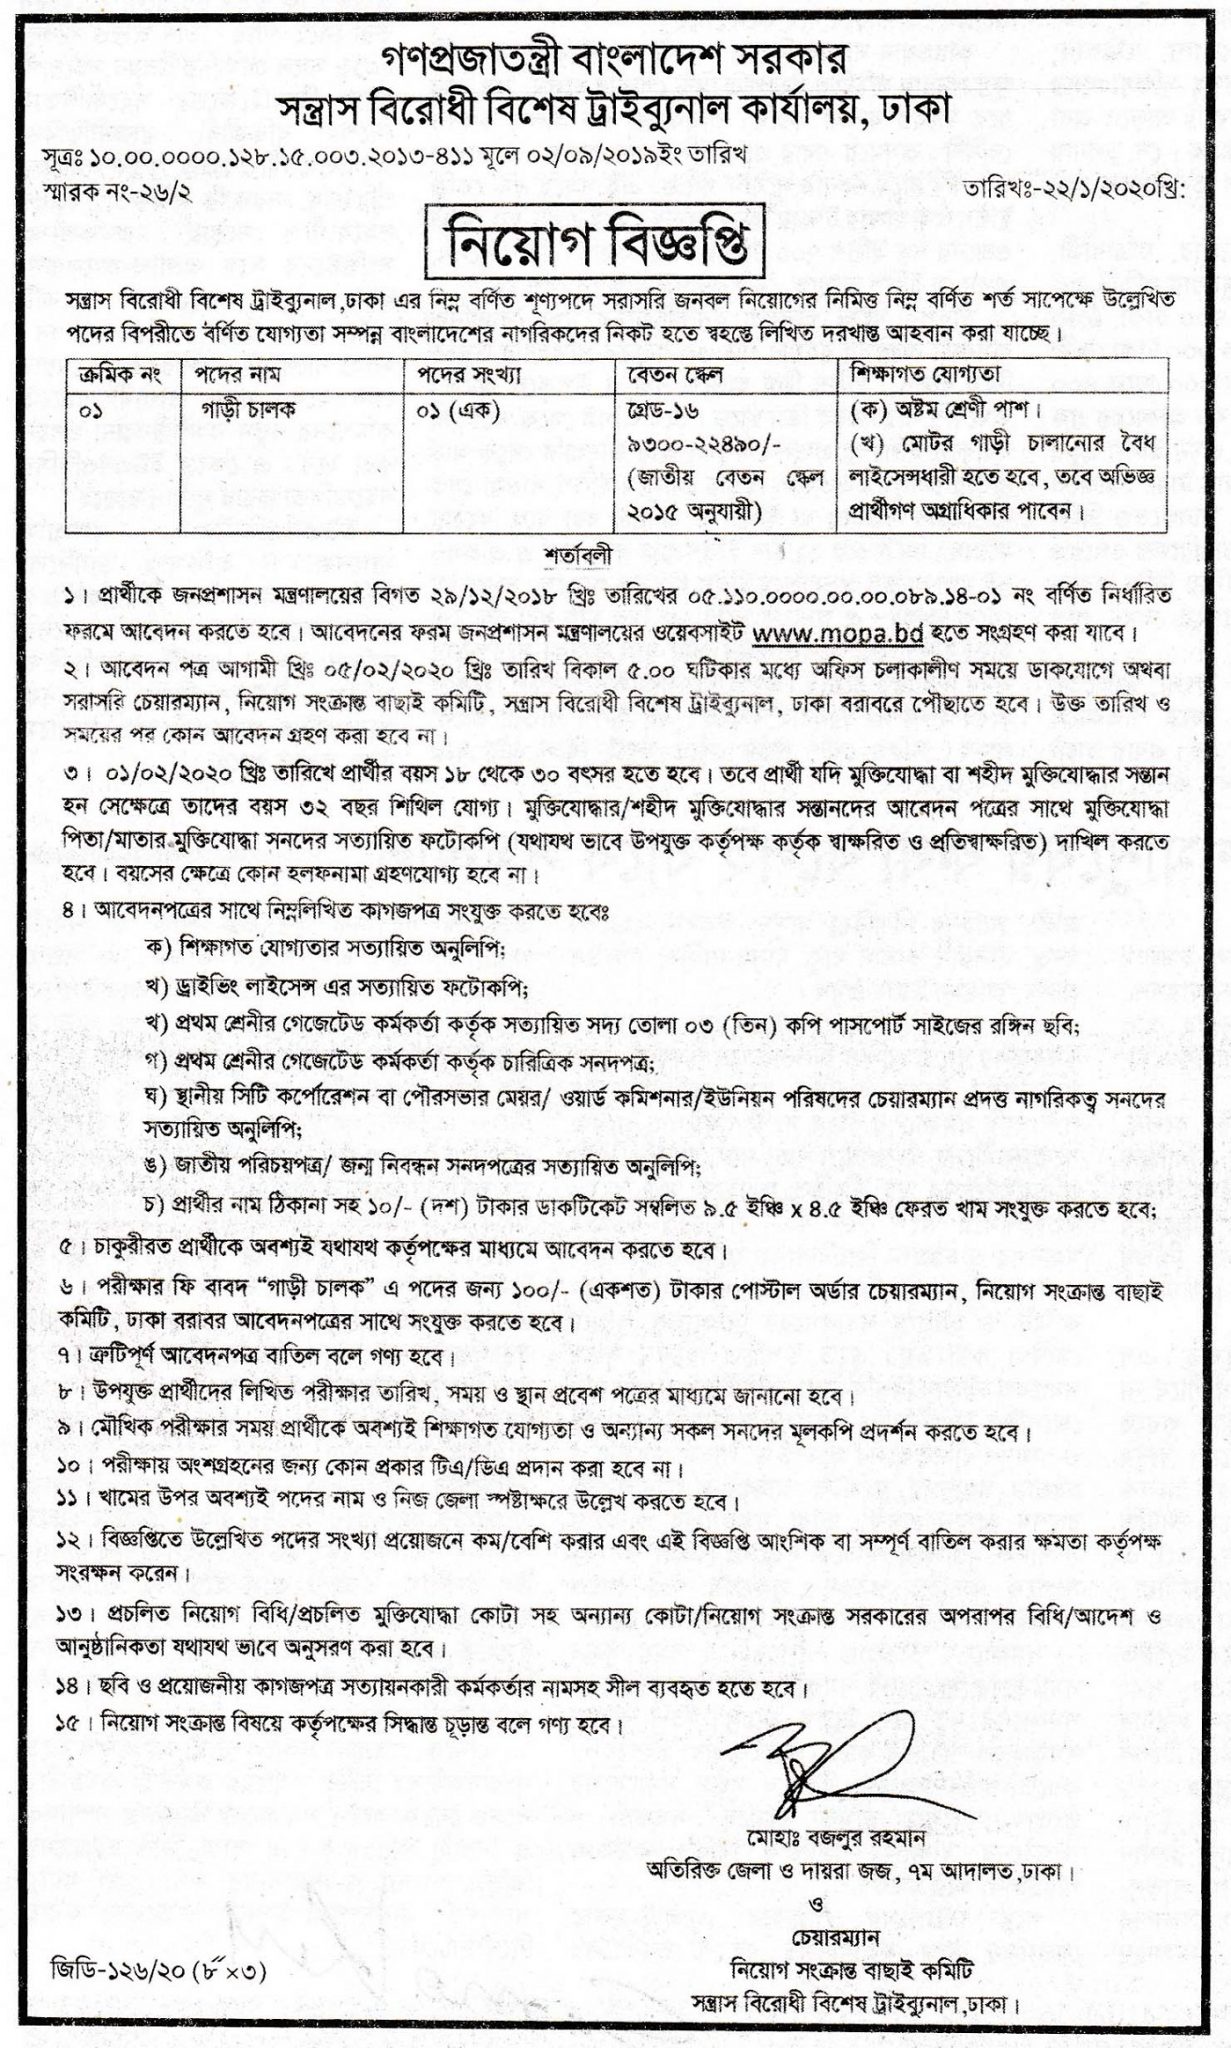 Anti-Terrorist Special Tribunal Office, Dhaka Job Circular 2020